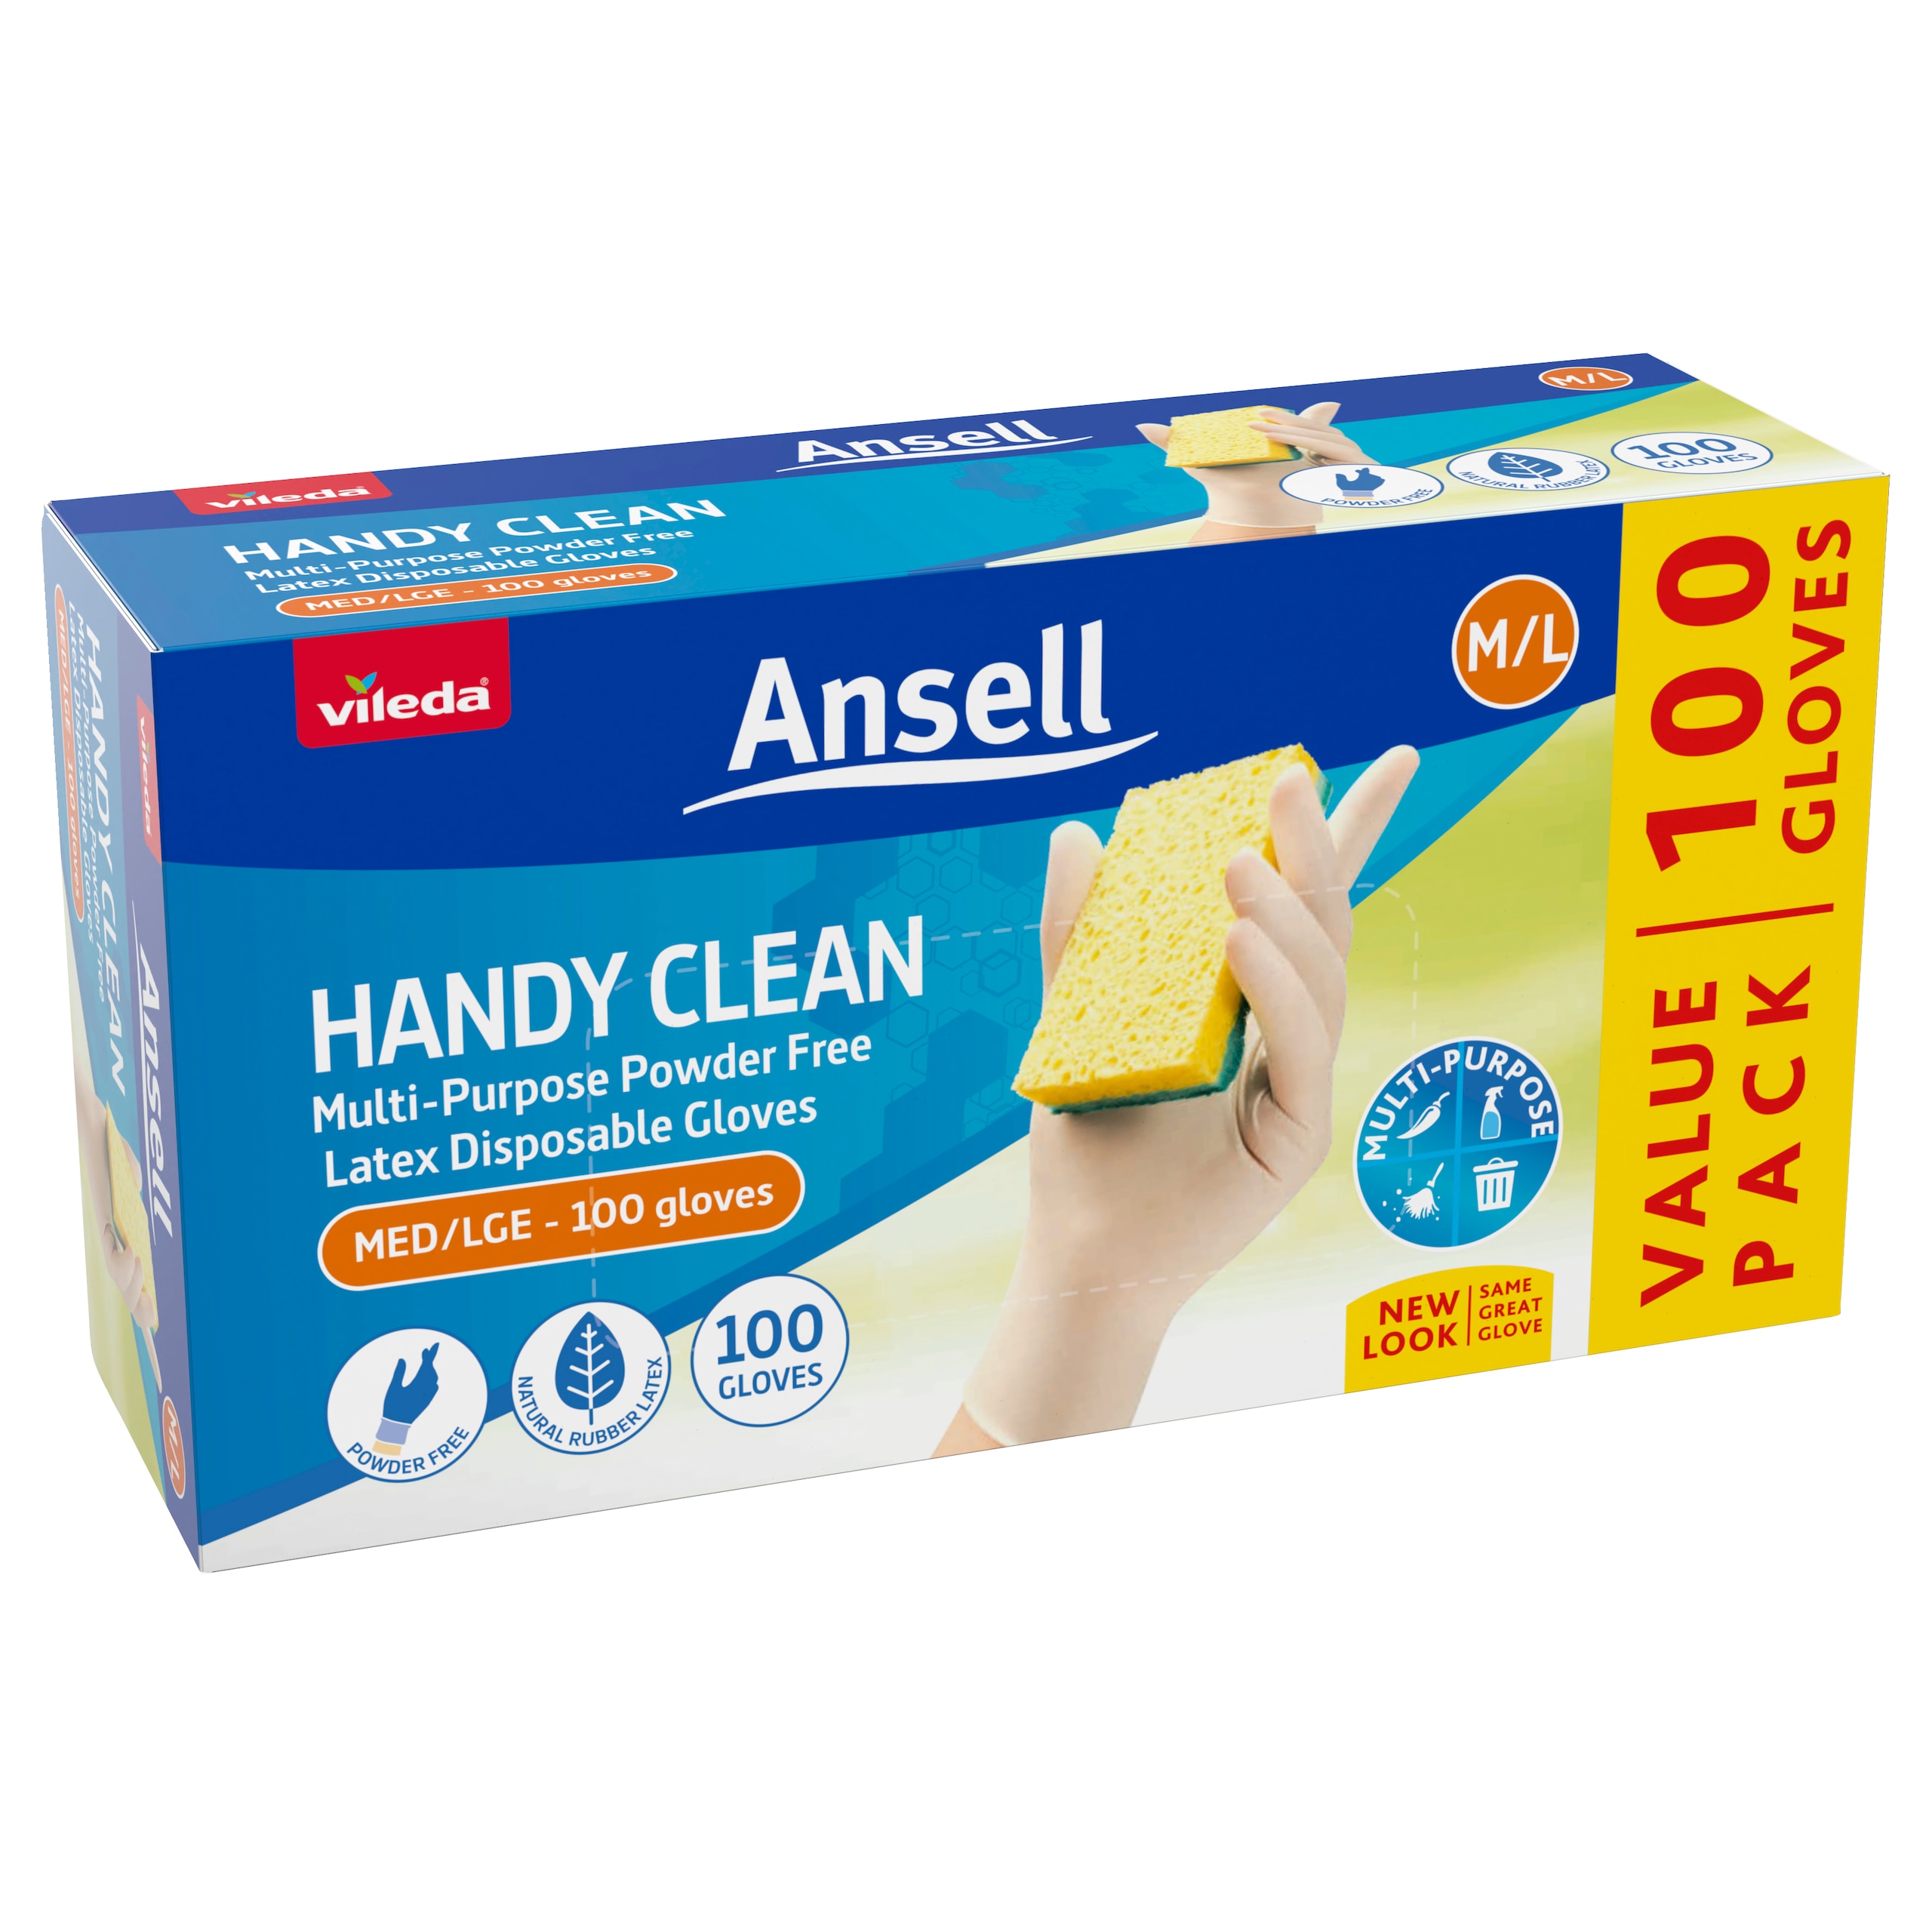 Vileda Ansell Handy Clean Latex Gloves 100-Pack - M/L